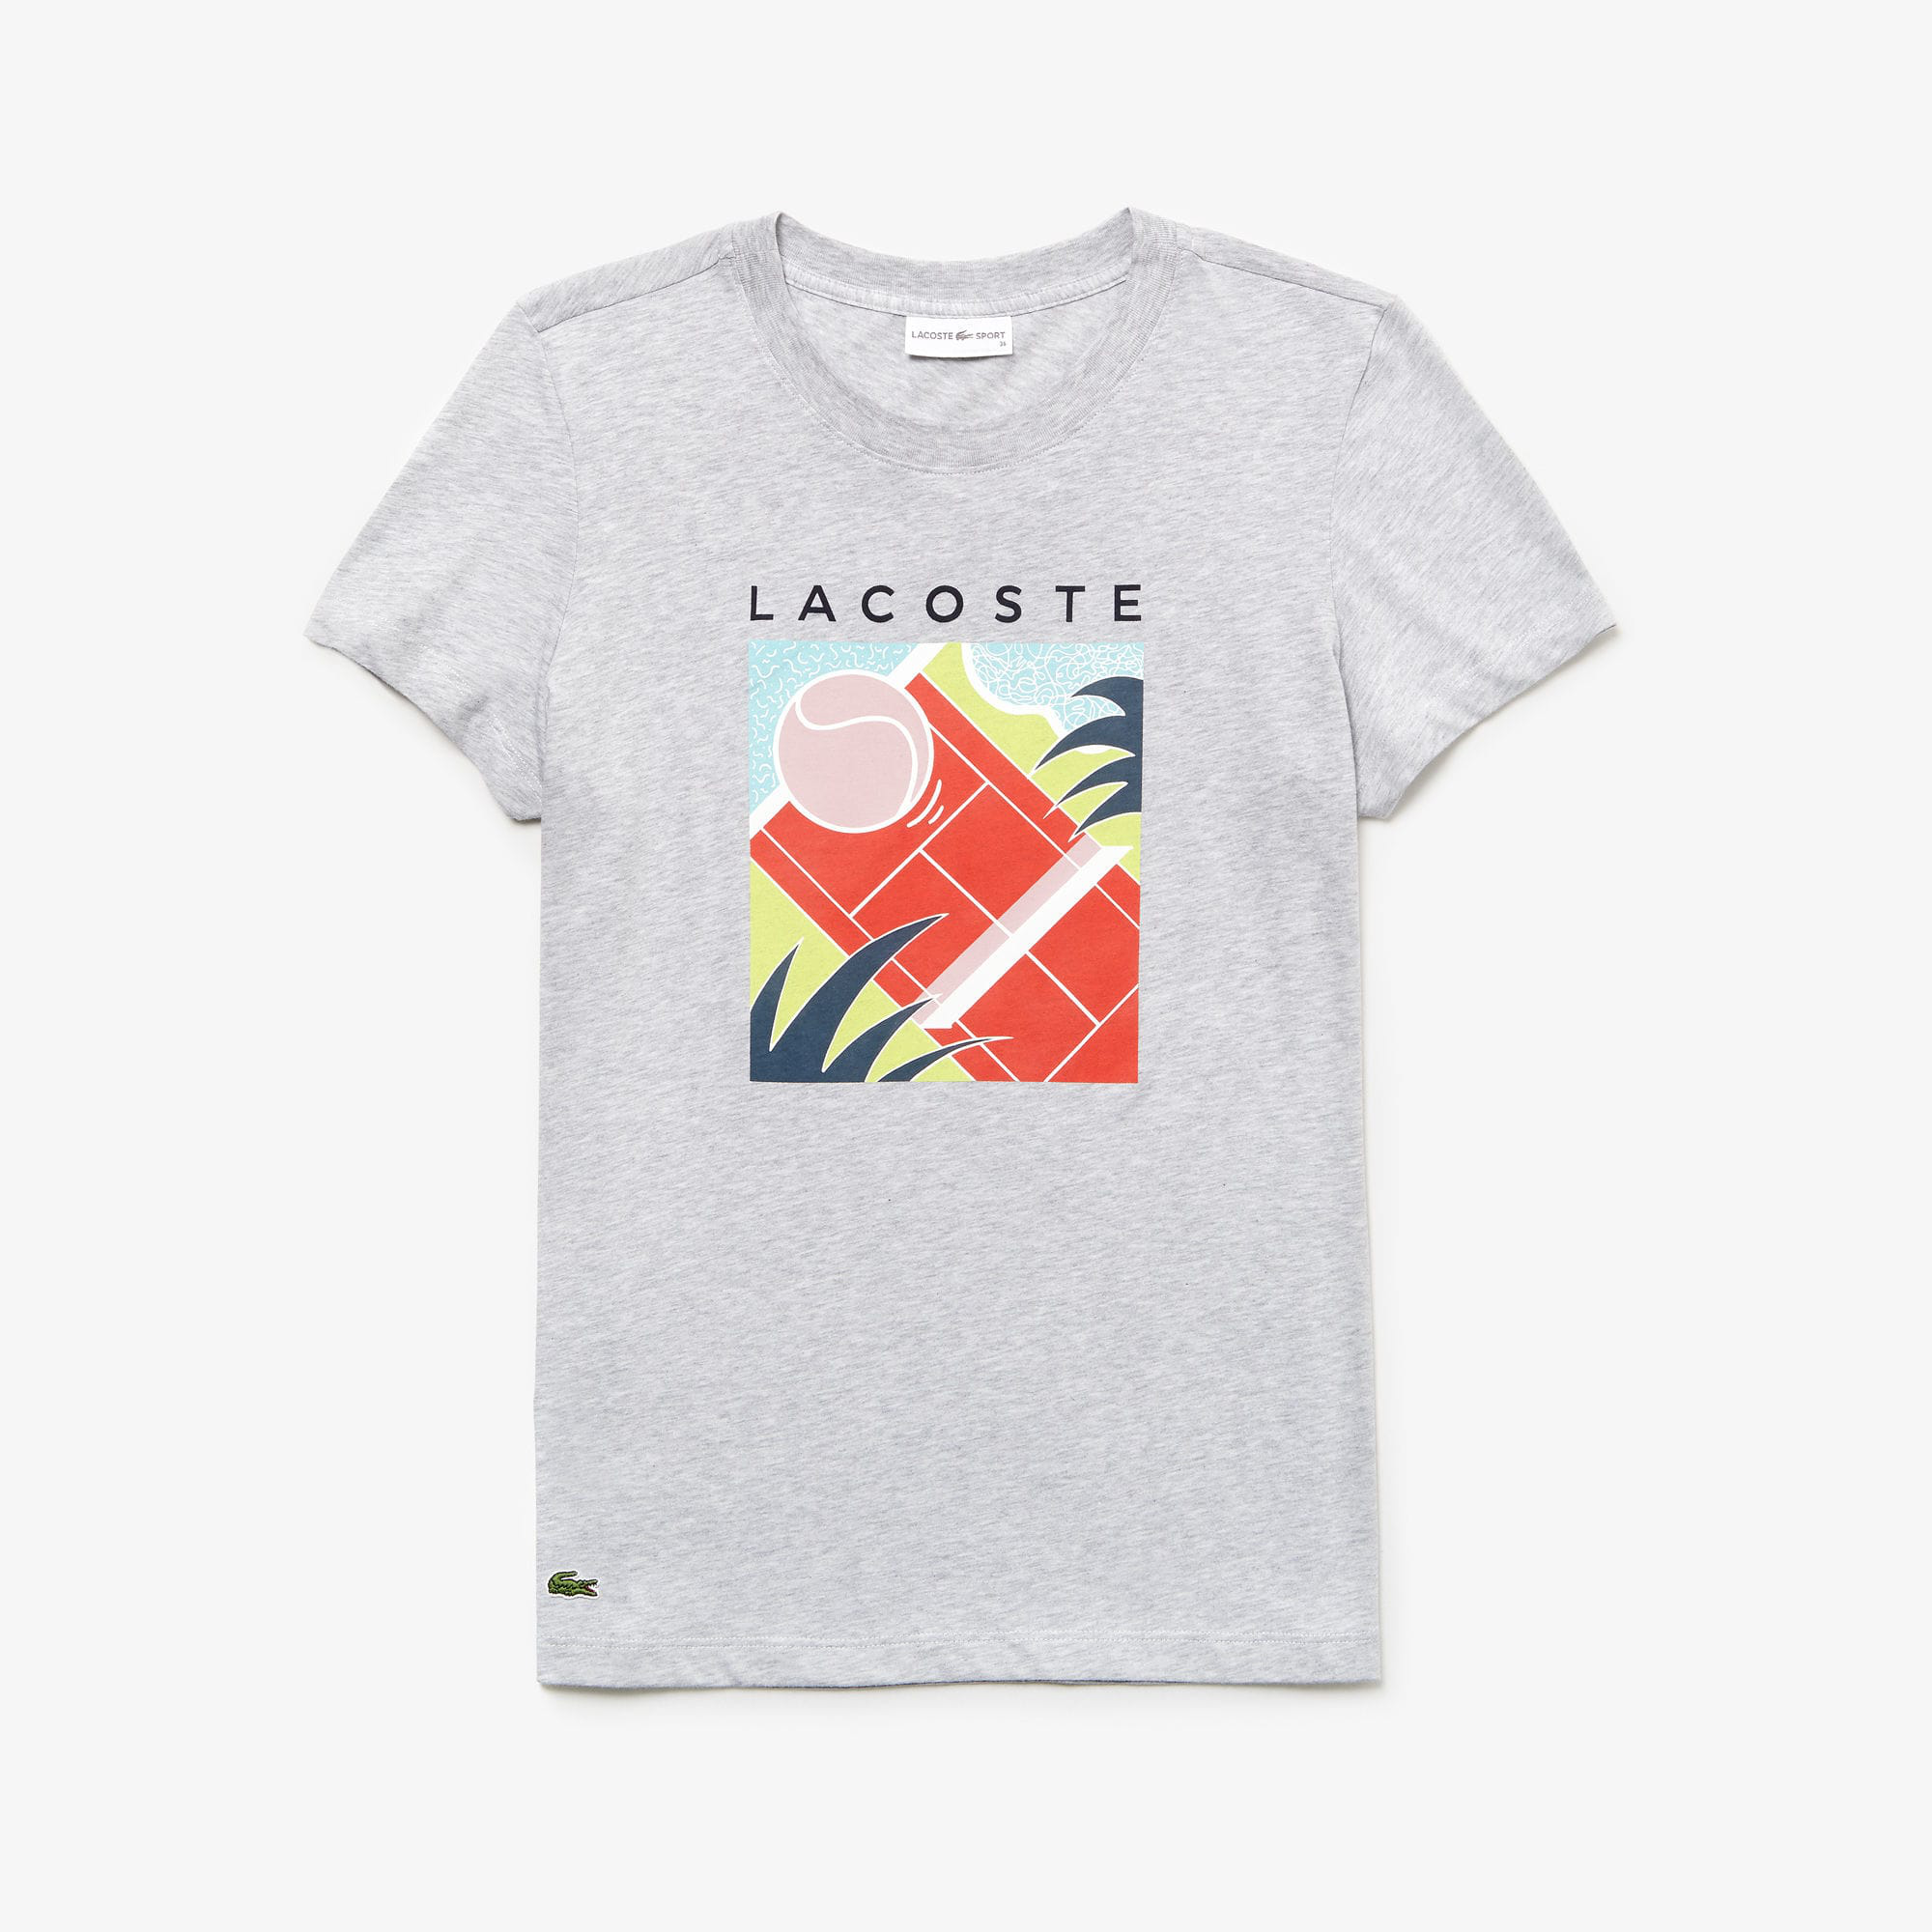 lacoste tshirt for women